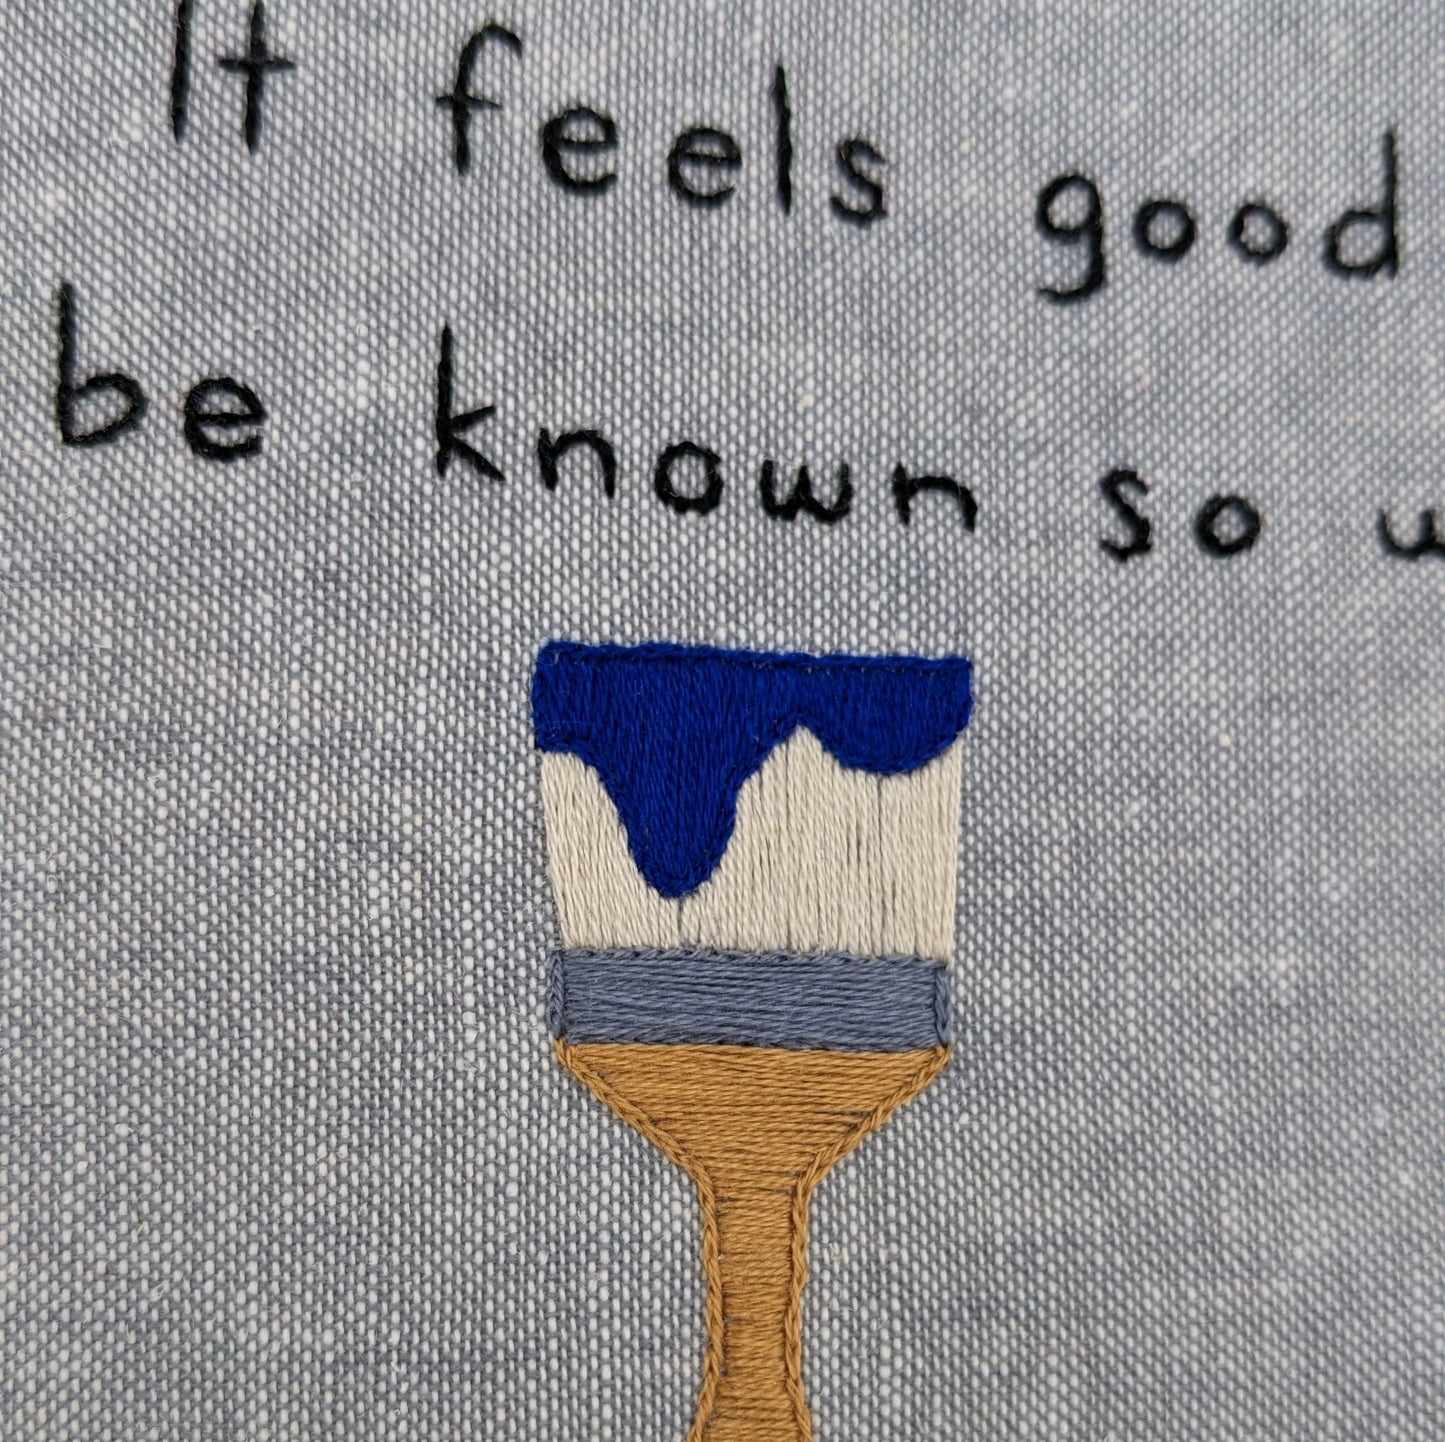 Boygenius "True Blue" Lyric Embroidery Hoop Art